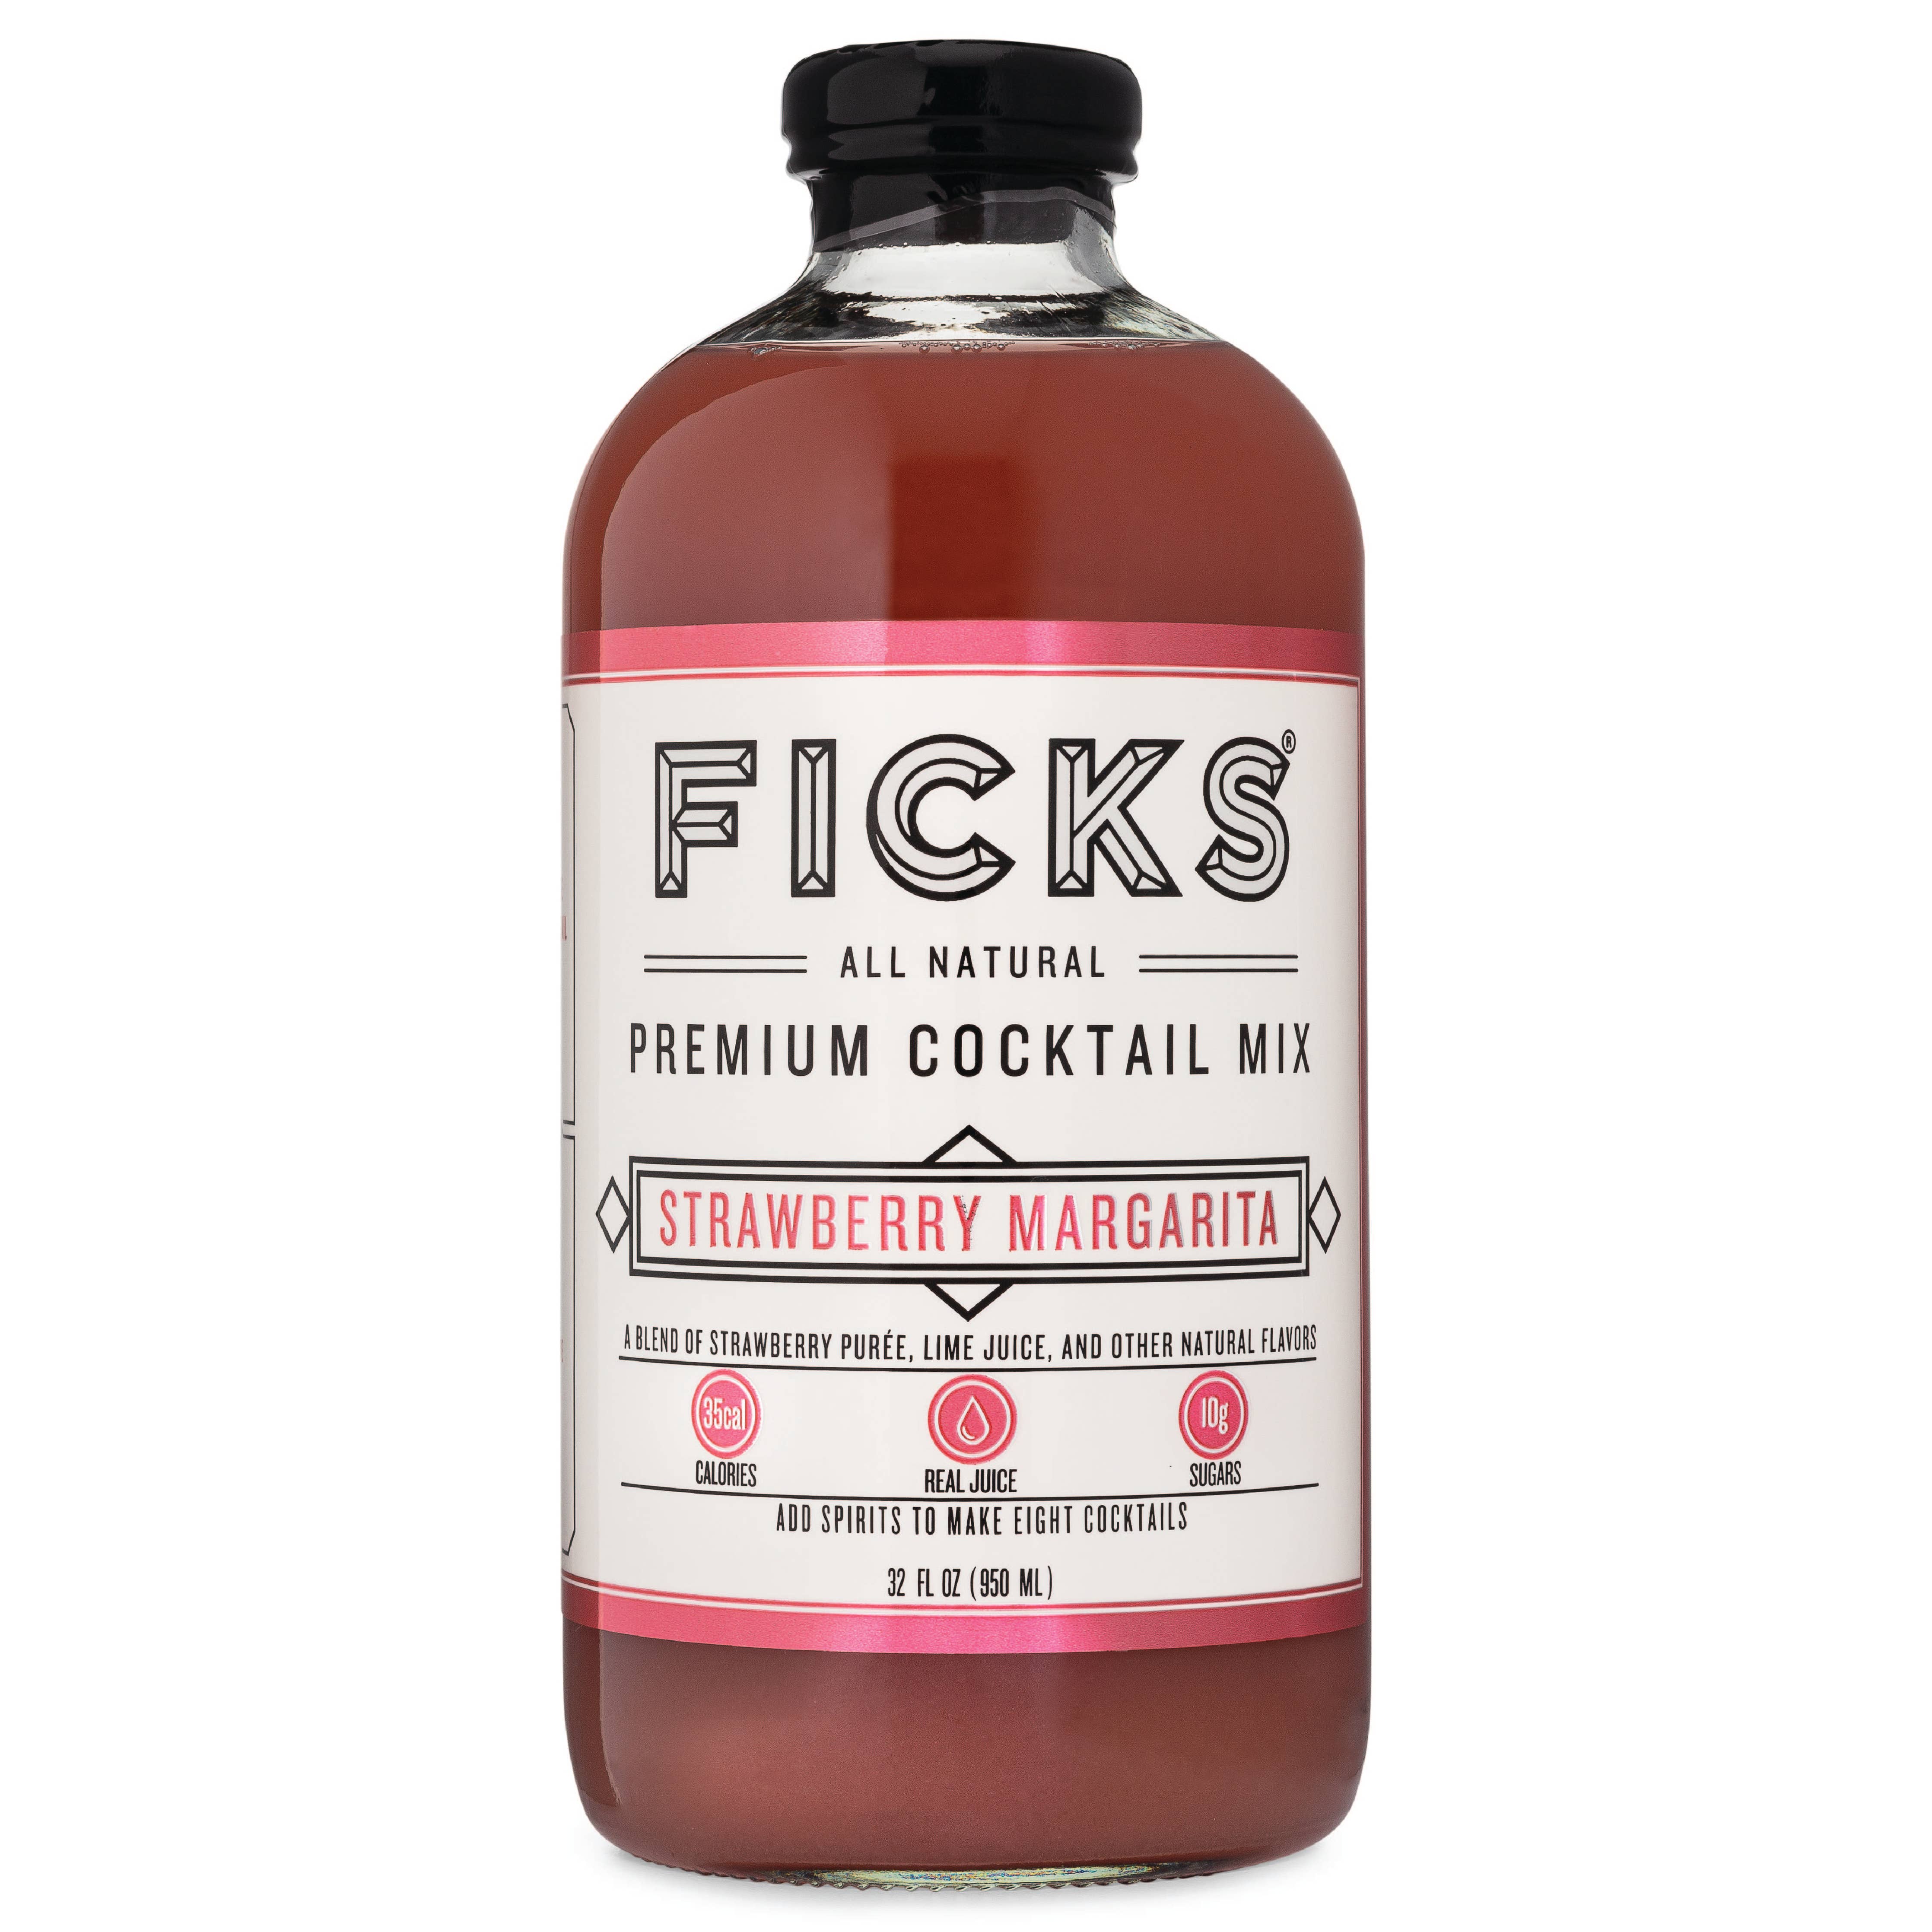 FICKS Premium Strawberry Margarita Cocktail Mix